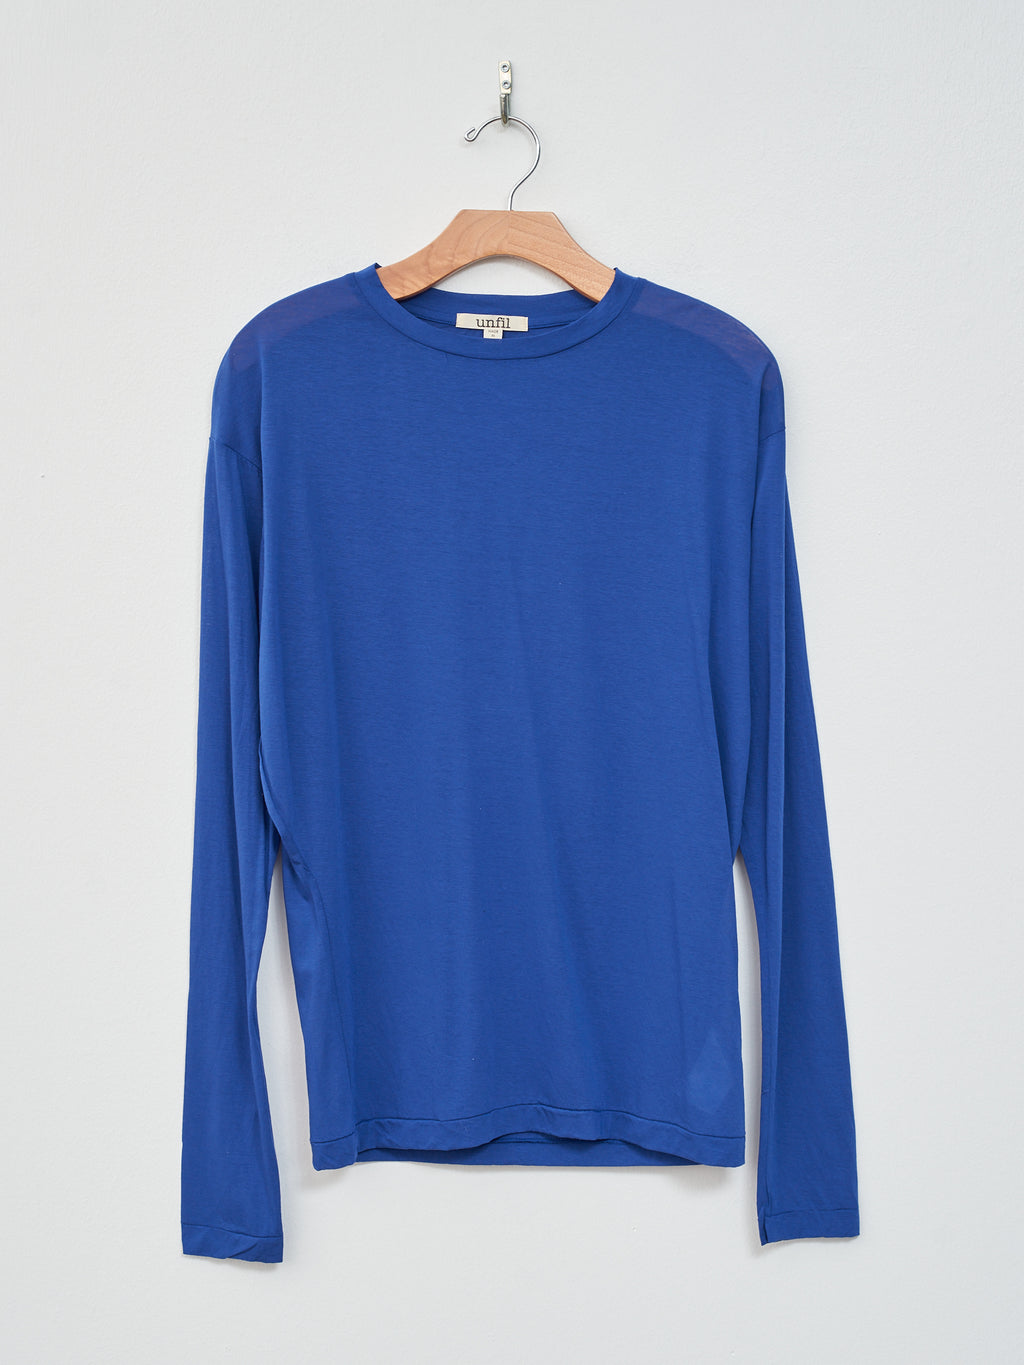 Namu Shop - Unfil Twisted Cotton Sheer Jersey Long Sleeve Tee - Lapis Blue